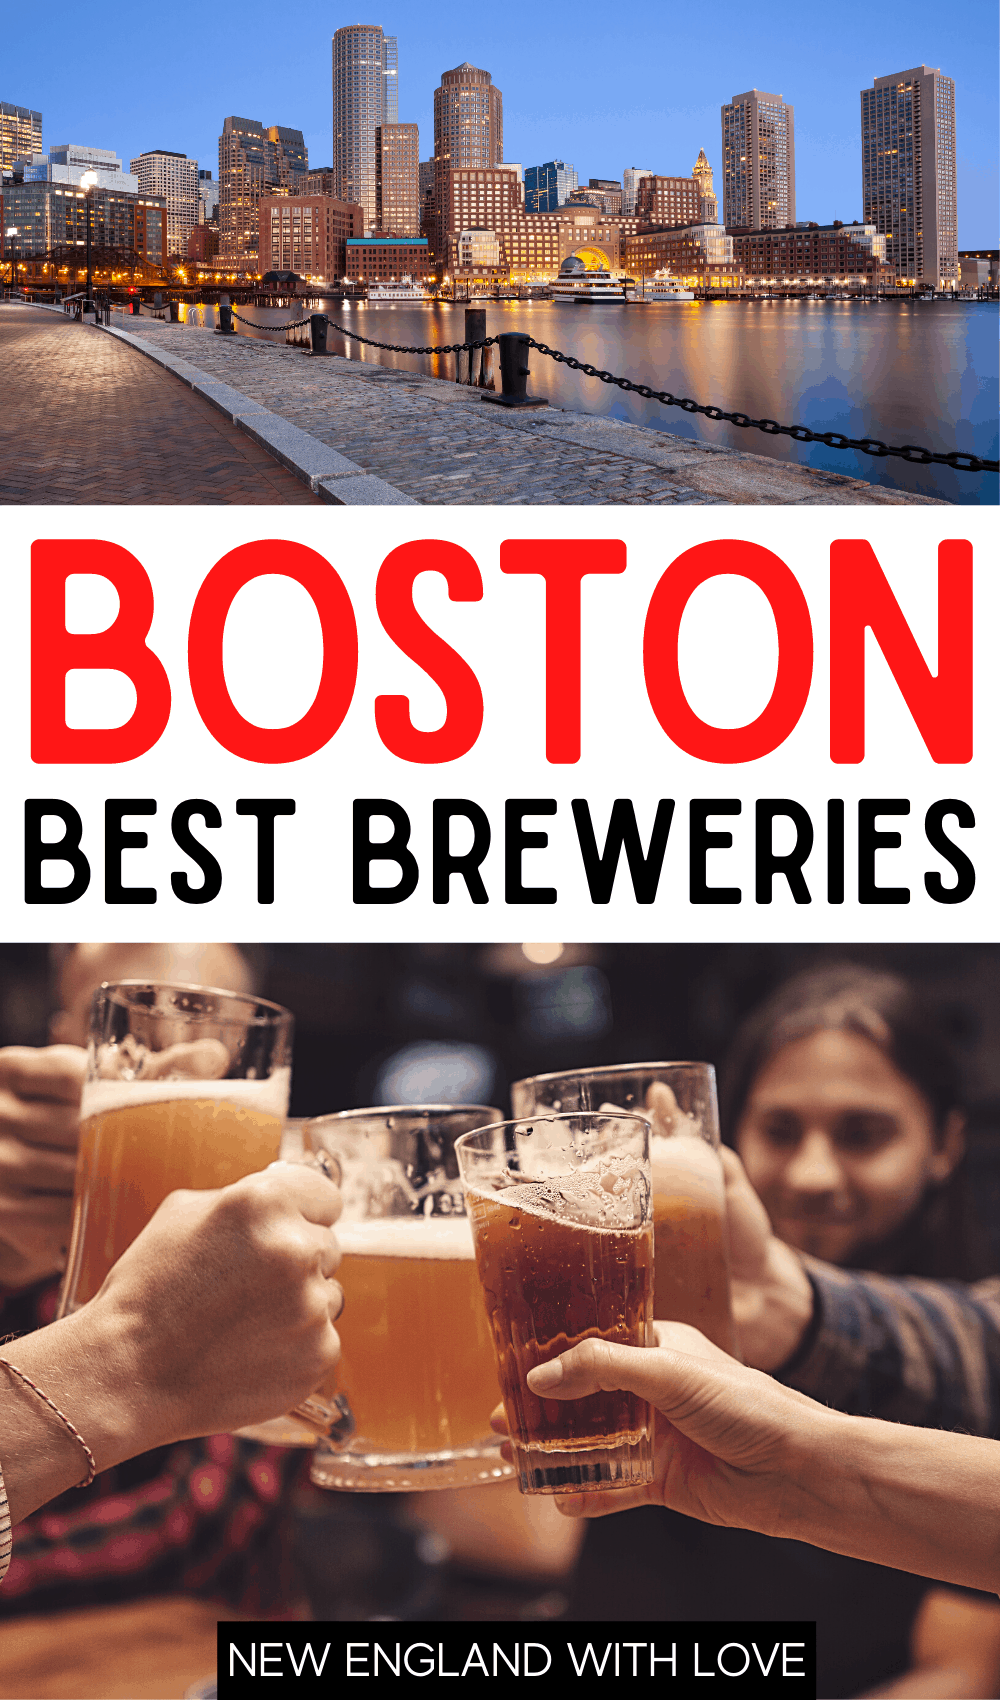 Pinterest graphic reading "BOSTON BEST BREWERIES"